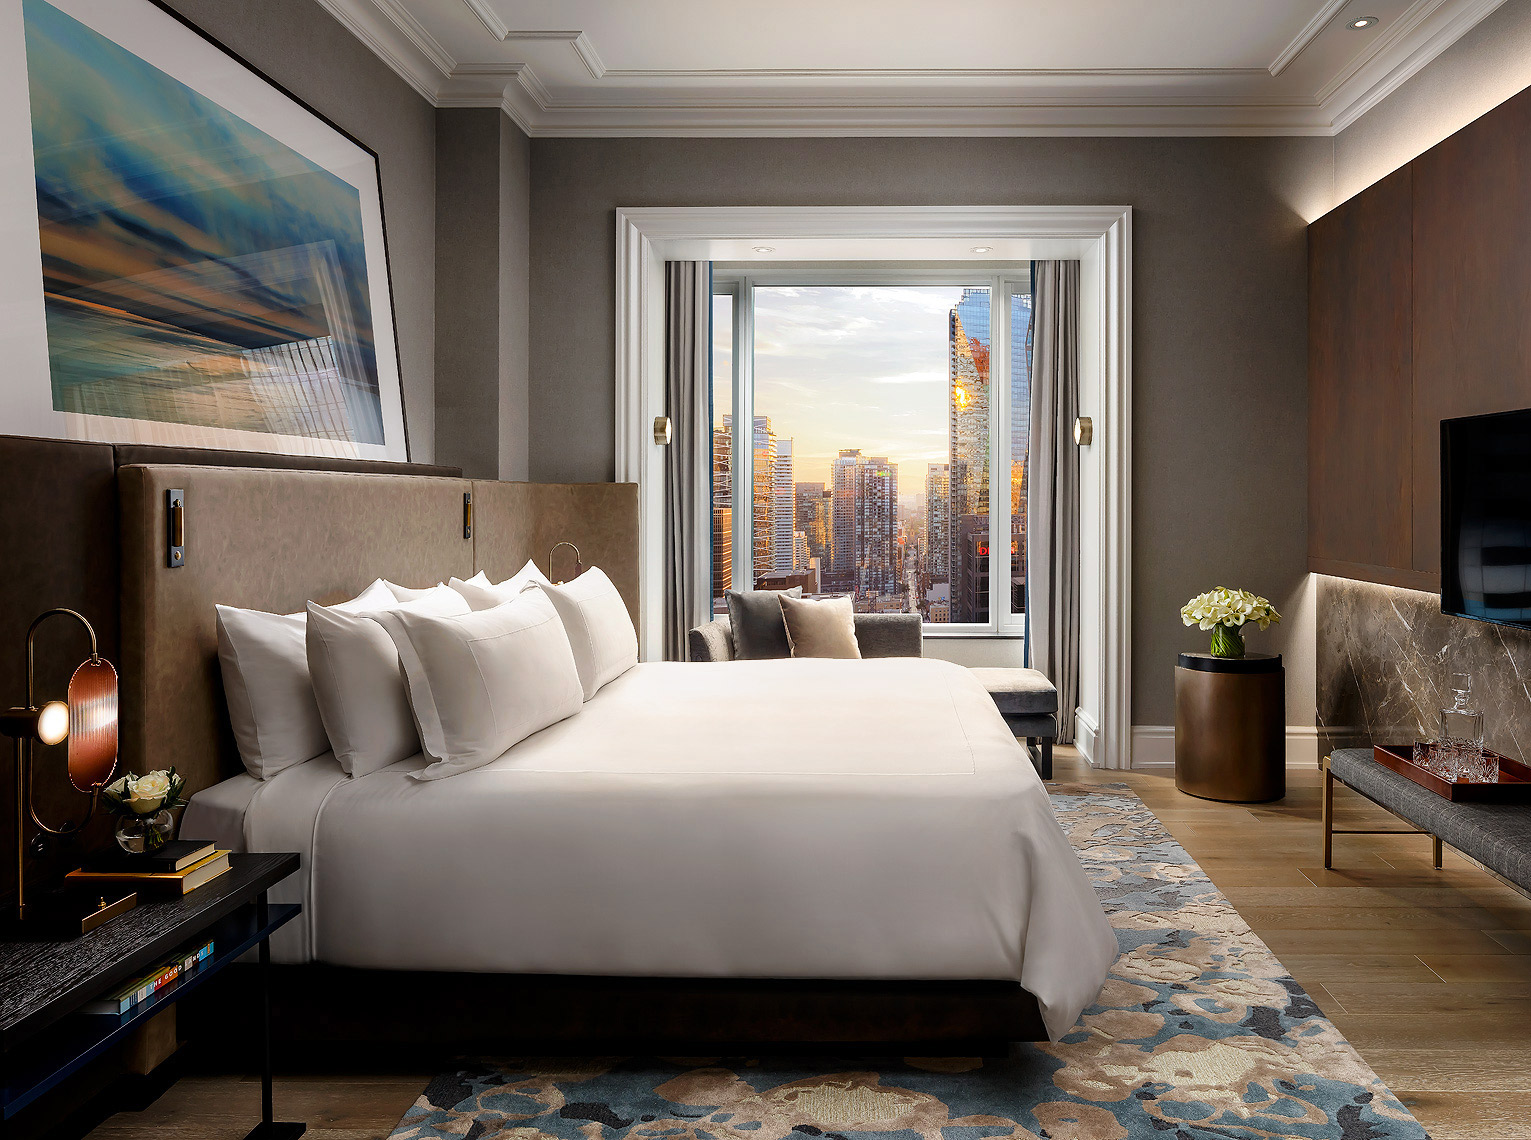 St. Regis Hotel Toronto - John Jacob Astor Suite primary bedroom